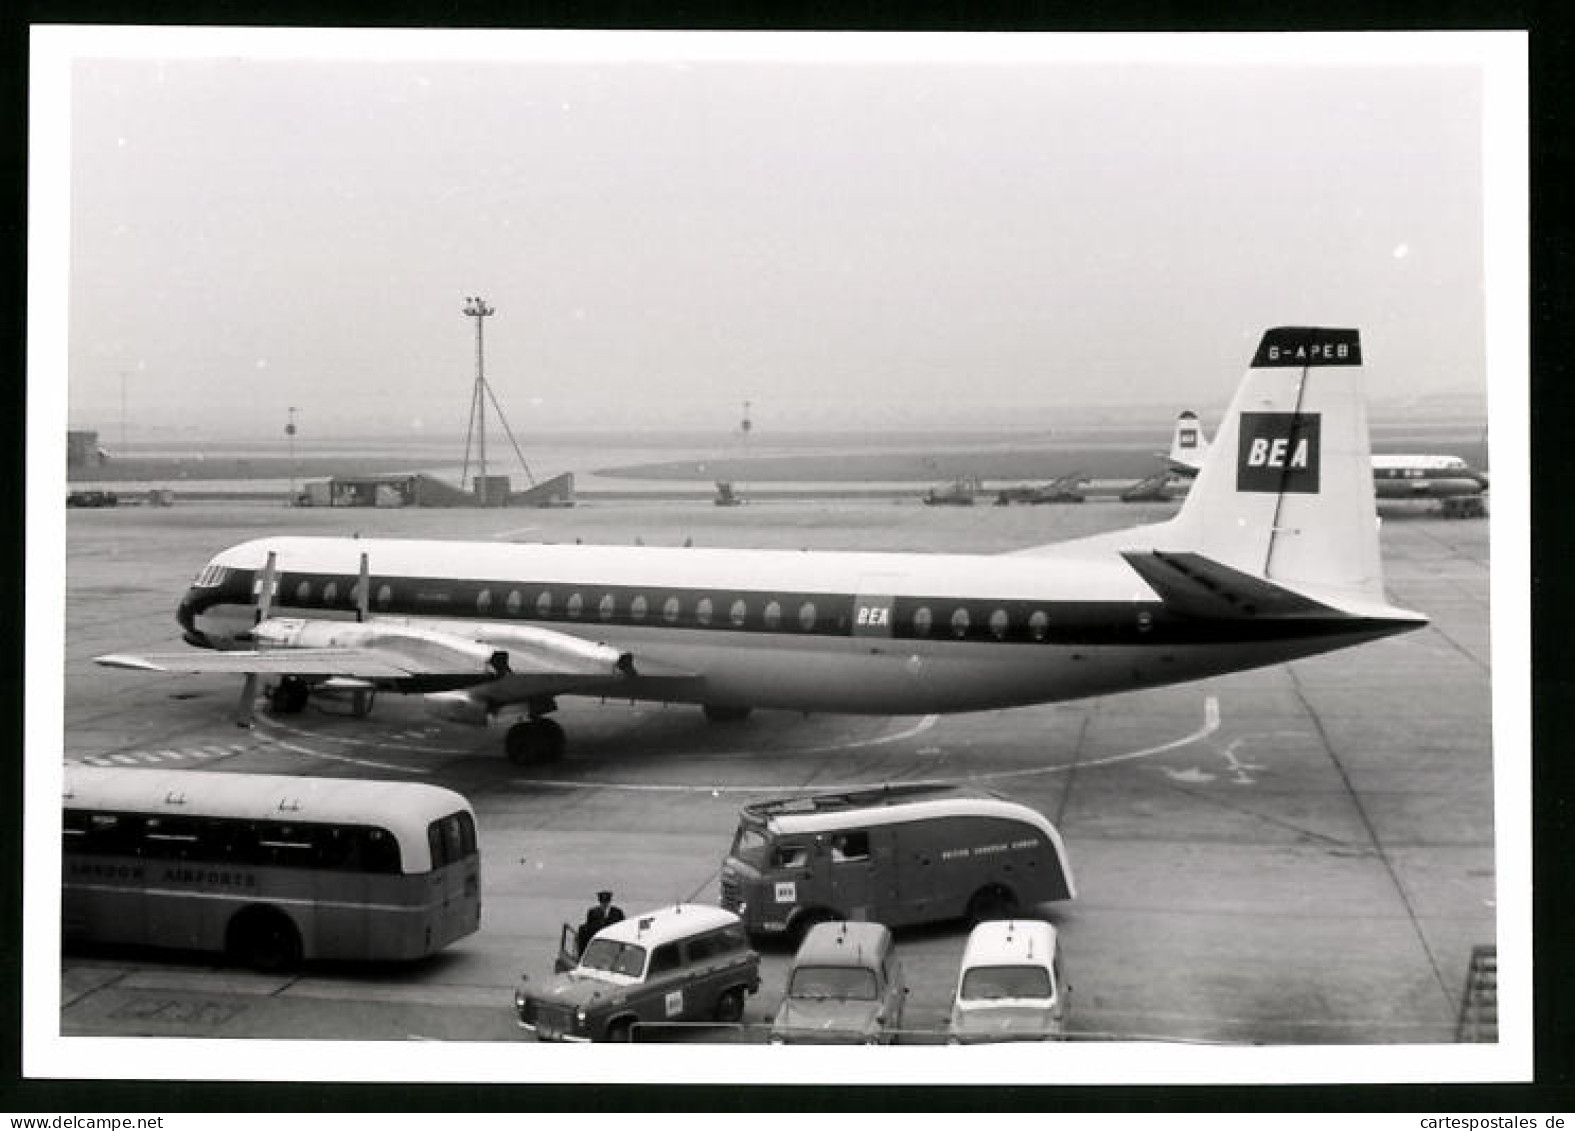 Fotografie Flughafen London, Flugzeug Vickers Vanguard, Passagierflugzeug BEA, Kennung G-APEB  - Luftfahrt